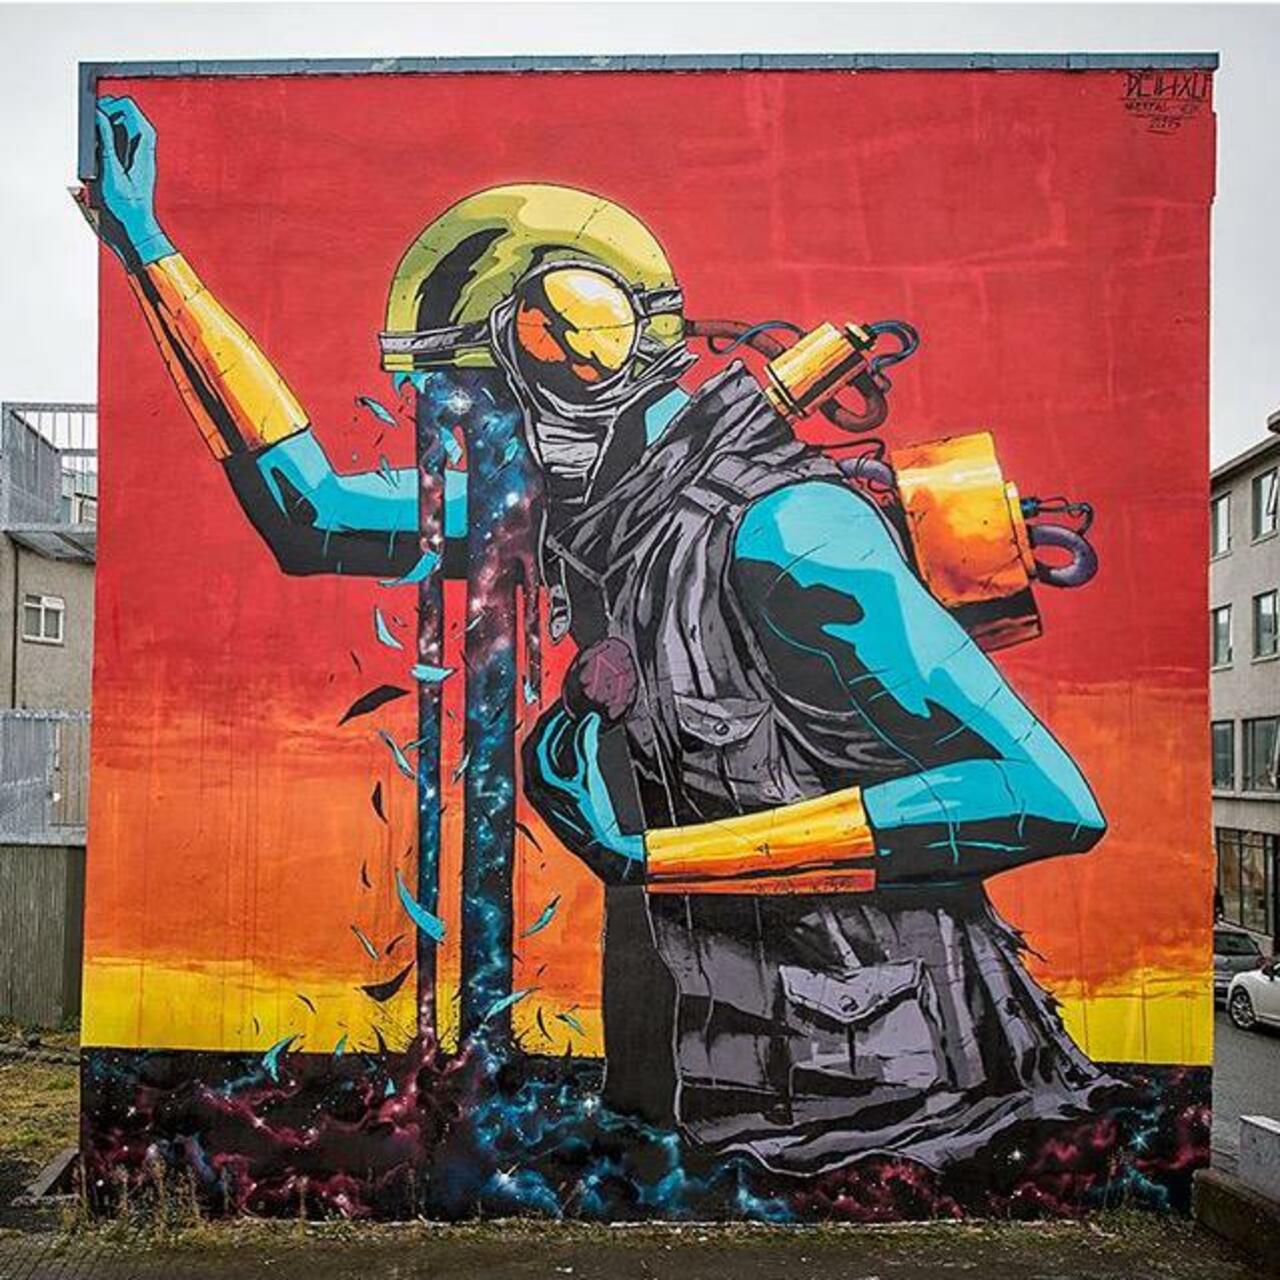 RT @wearpure_com: Street Art by Deih in Reykjavik 

#art #graffiti #mural #streetart https://t.co/zQxTeCExbH